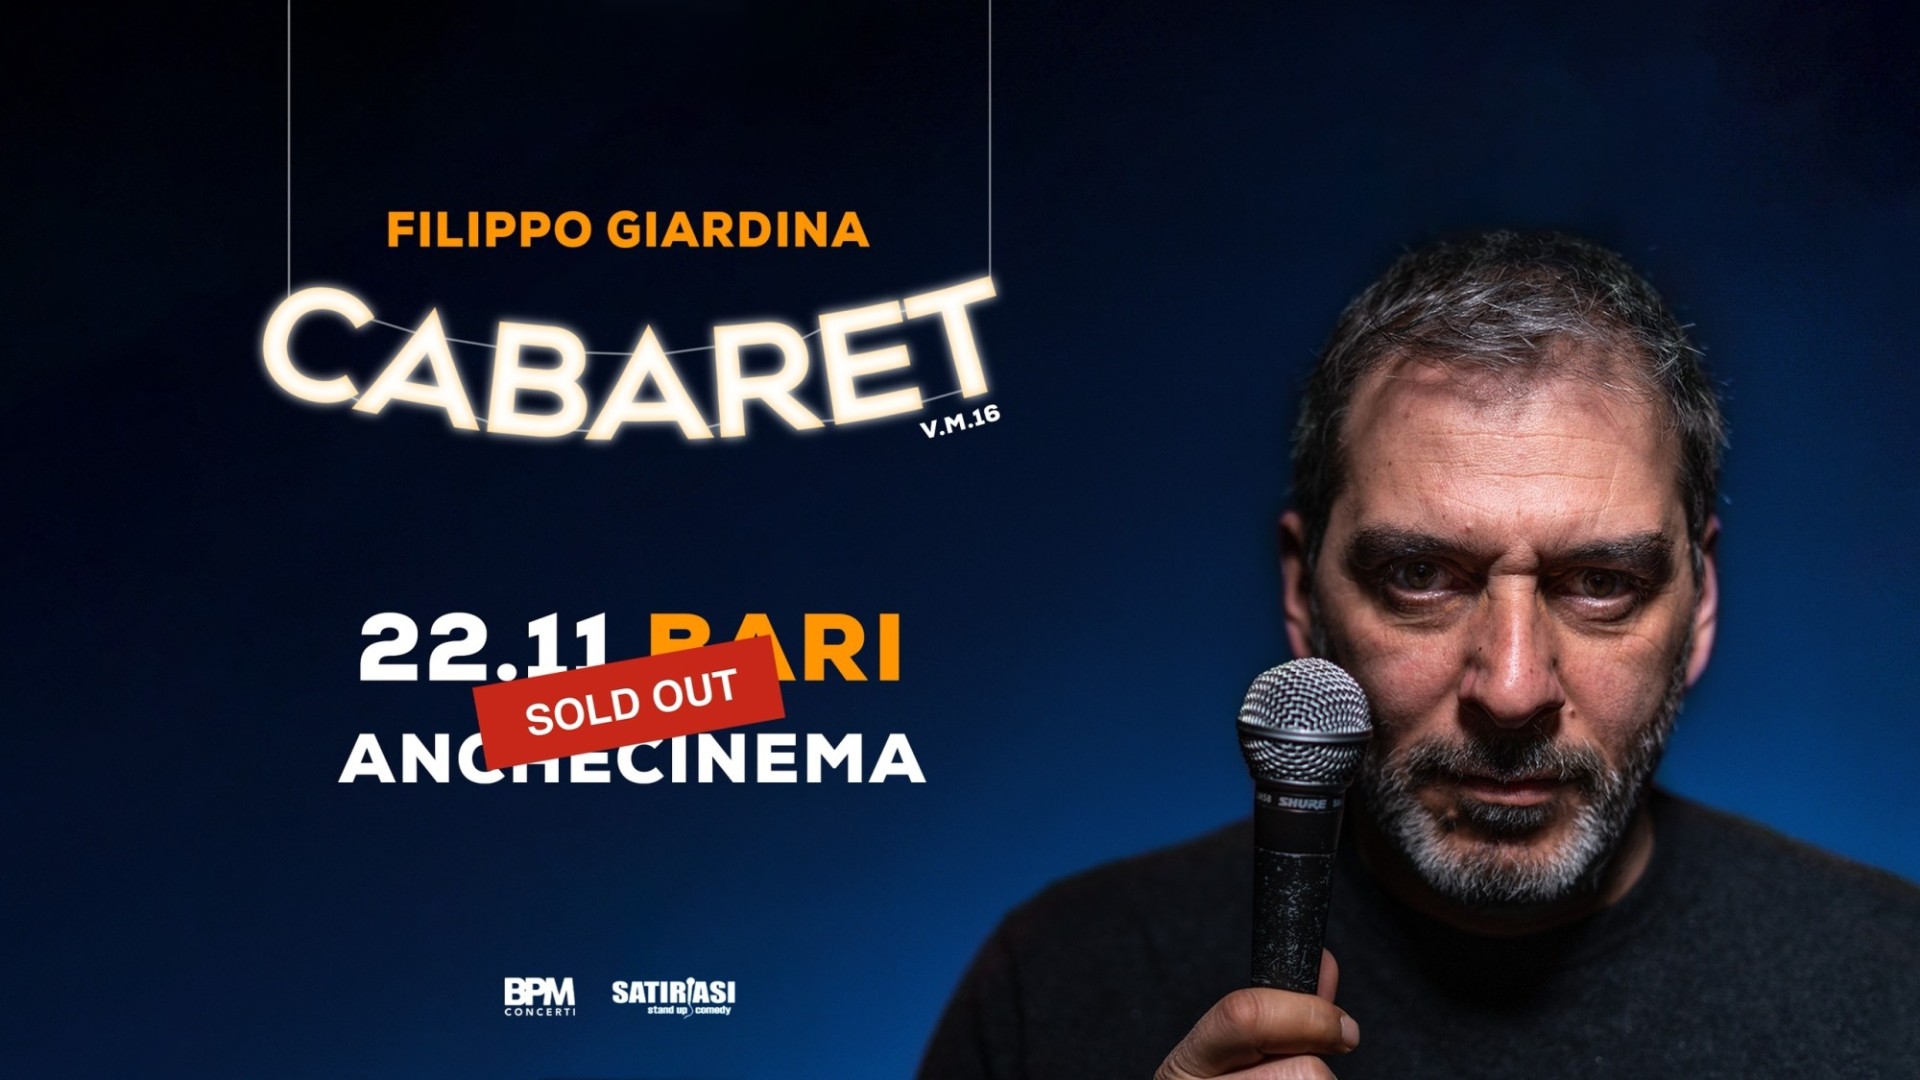 Filippo Giardina "Cabaret"